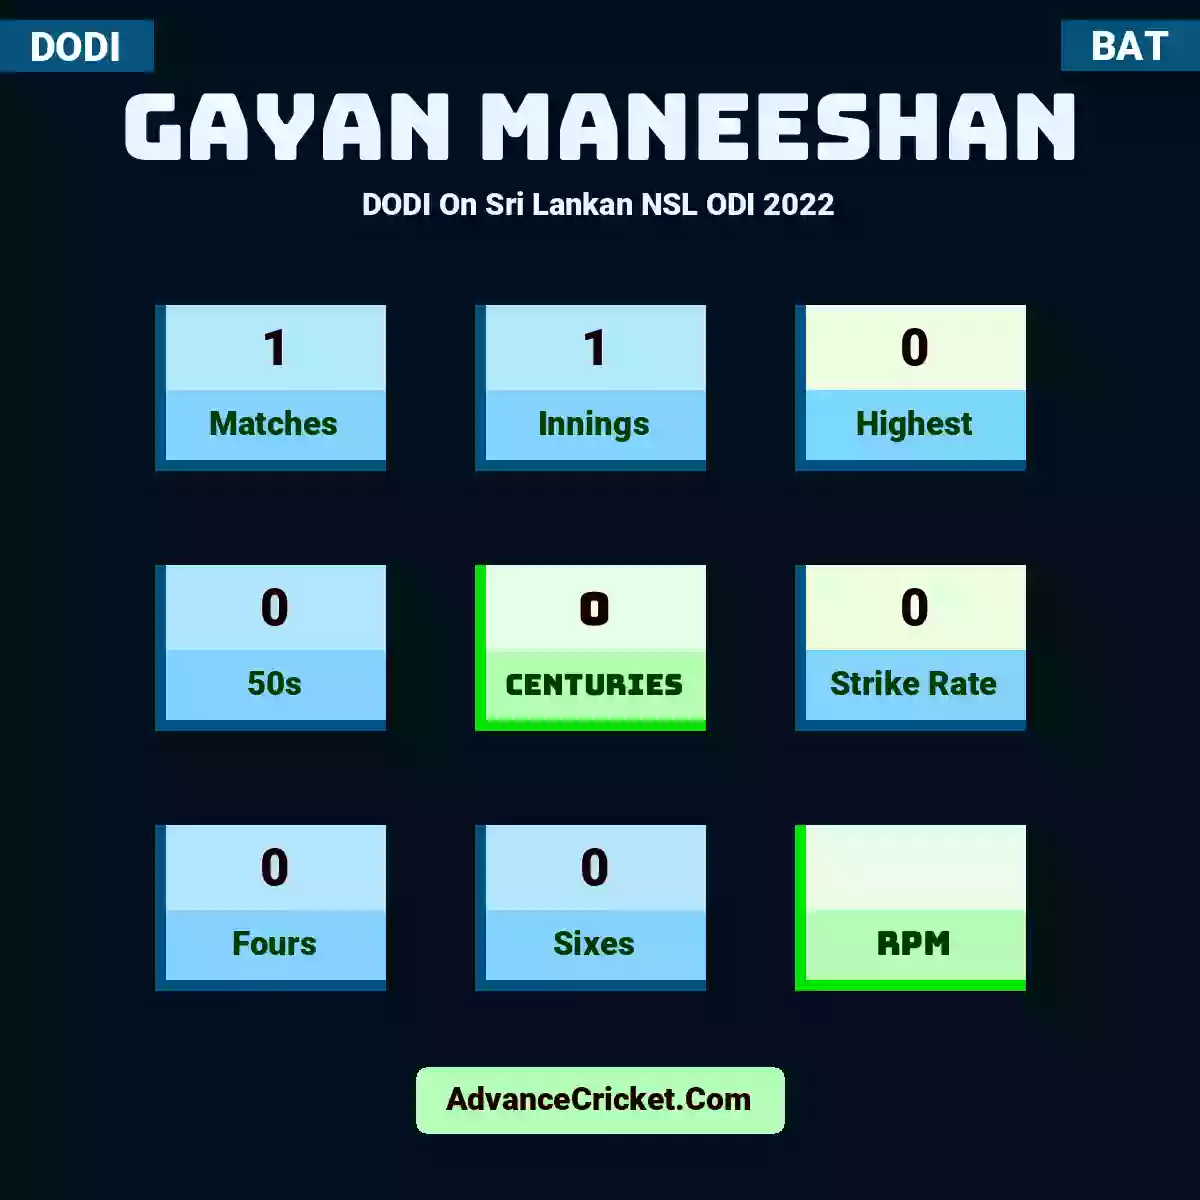 Gayan Maneeshan DODI  On Sri Lankan NSL ODI 2022, Gayan Maneeshan played 1 matches, scored 0 runs as highest, 0 half-centuries, and 0 centuries, with a strike rate of 0. G.Maneeshan hit 0 fours and 0 sixes.